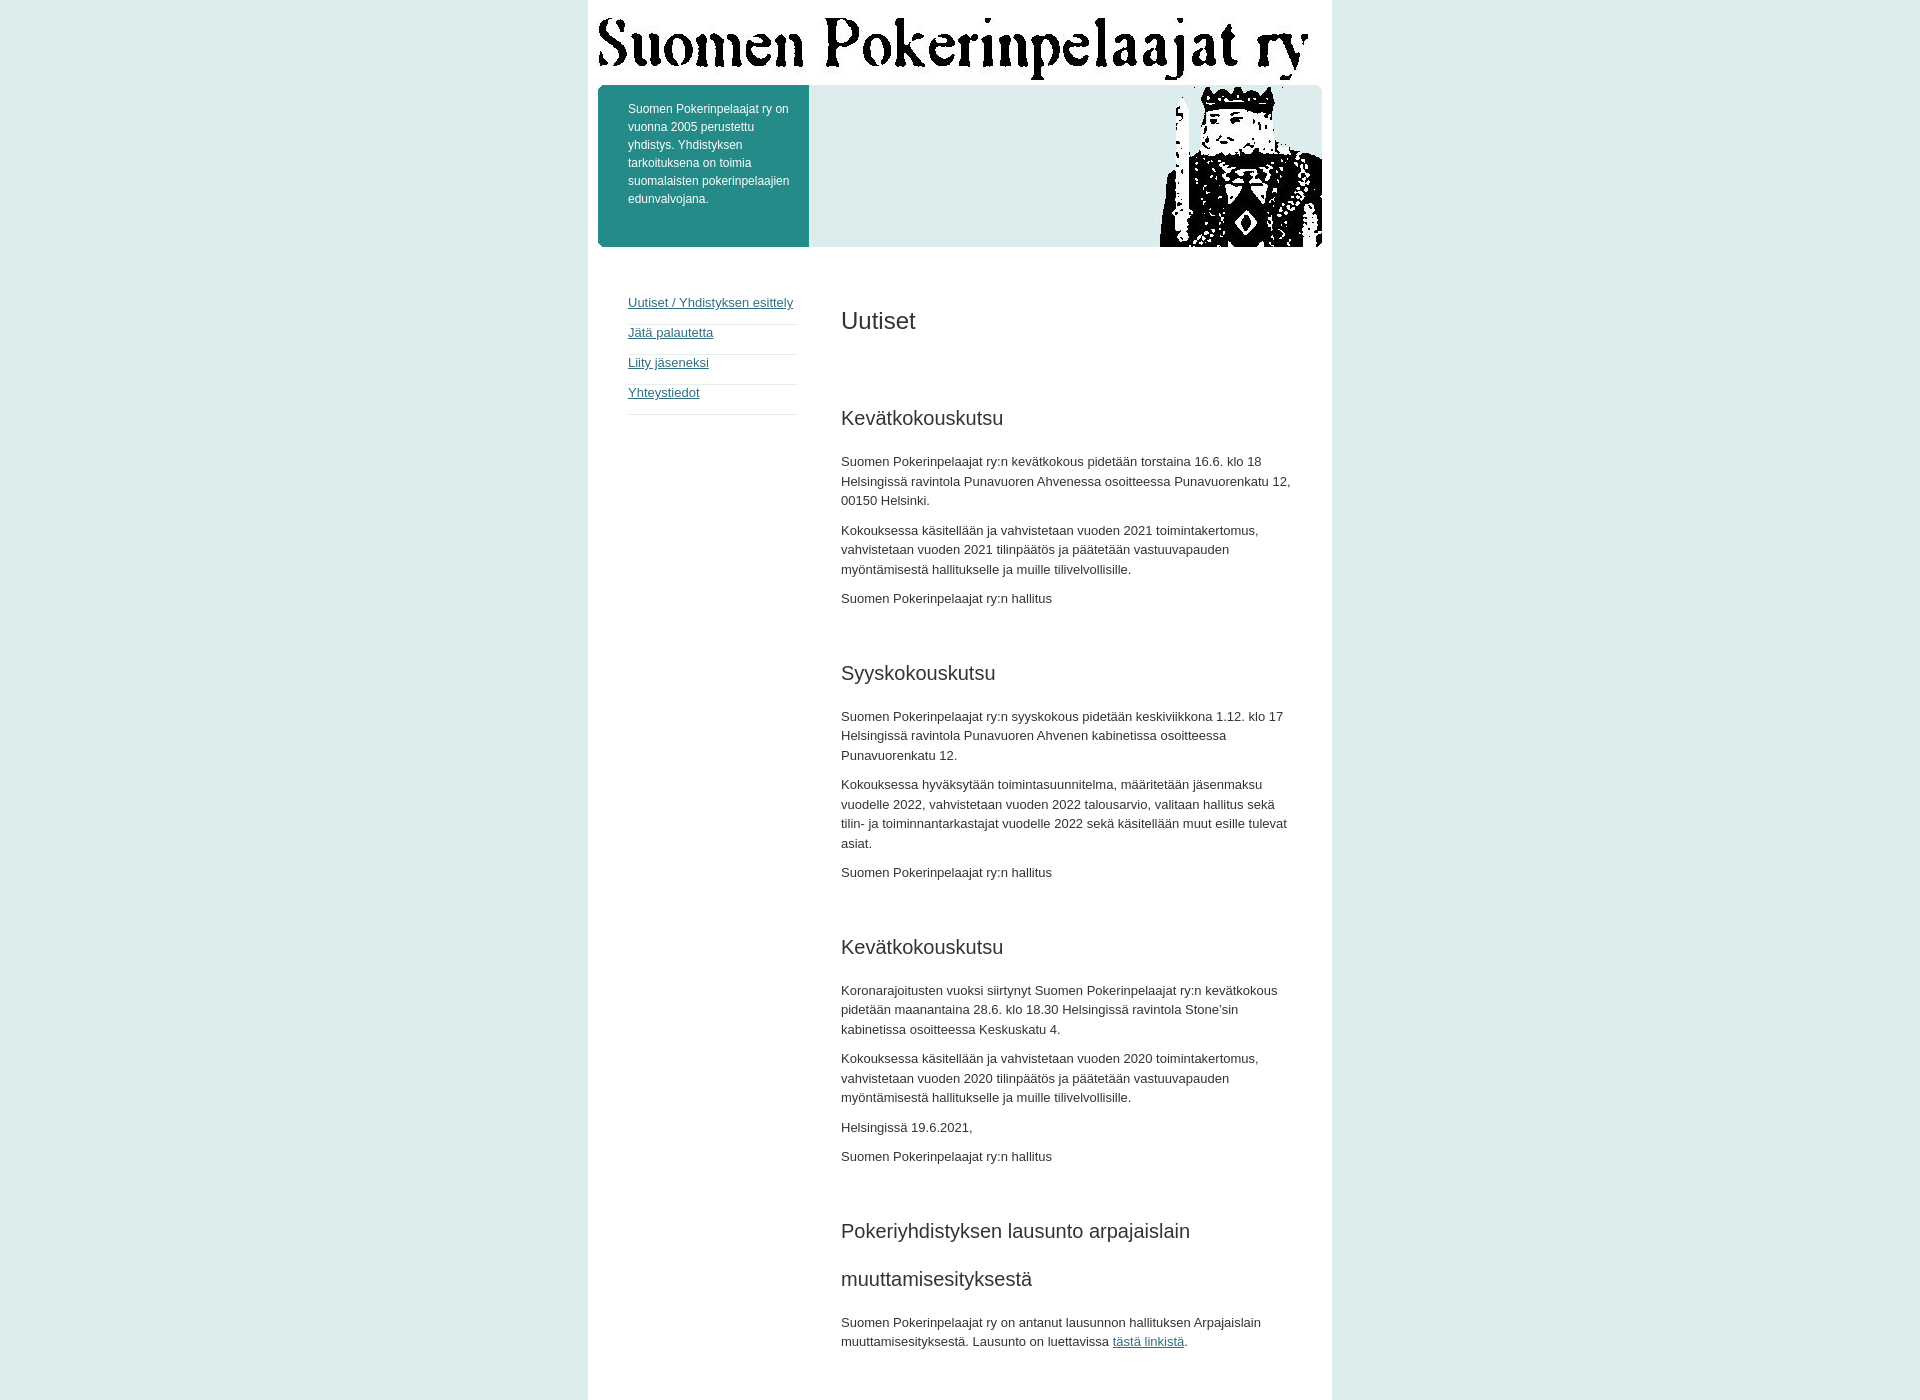 Skärmdump för pokeriyhdistys.fi